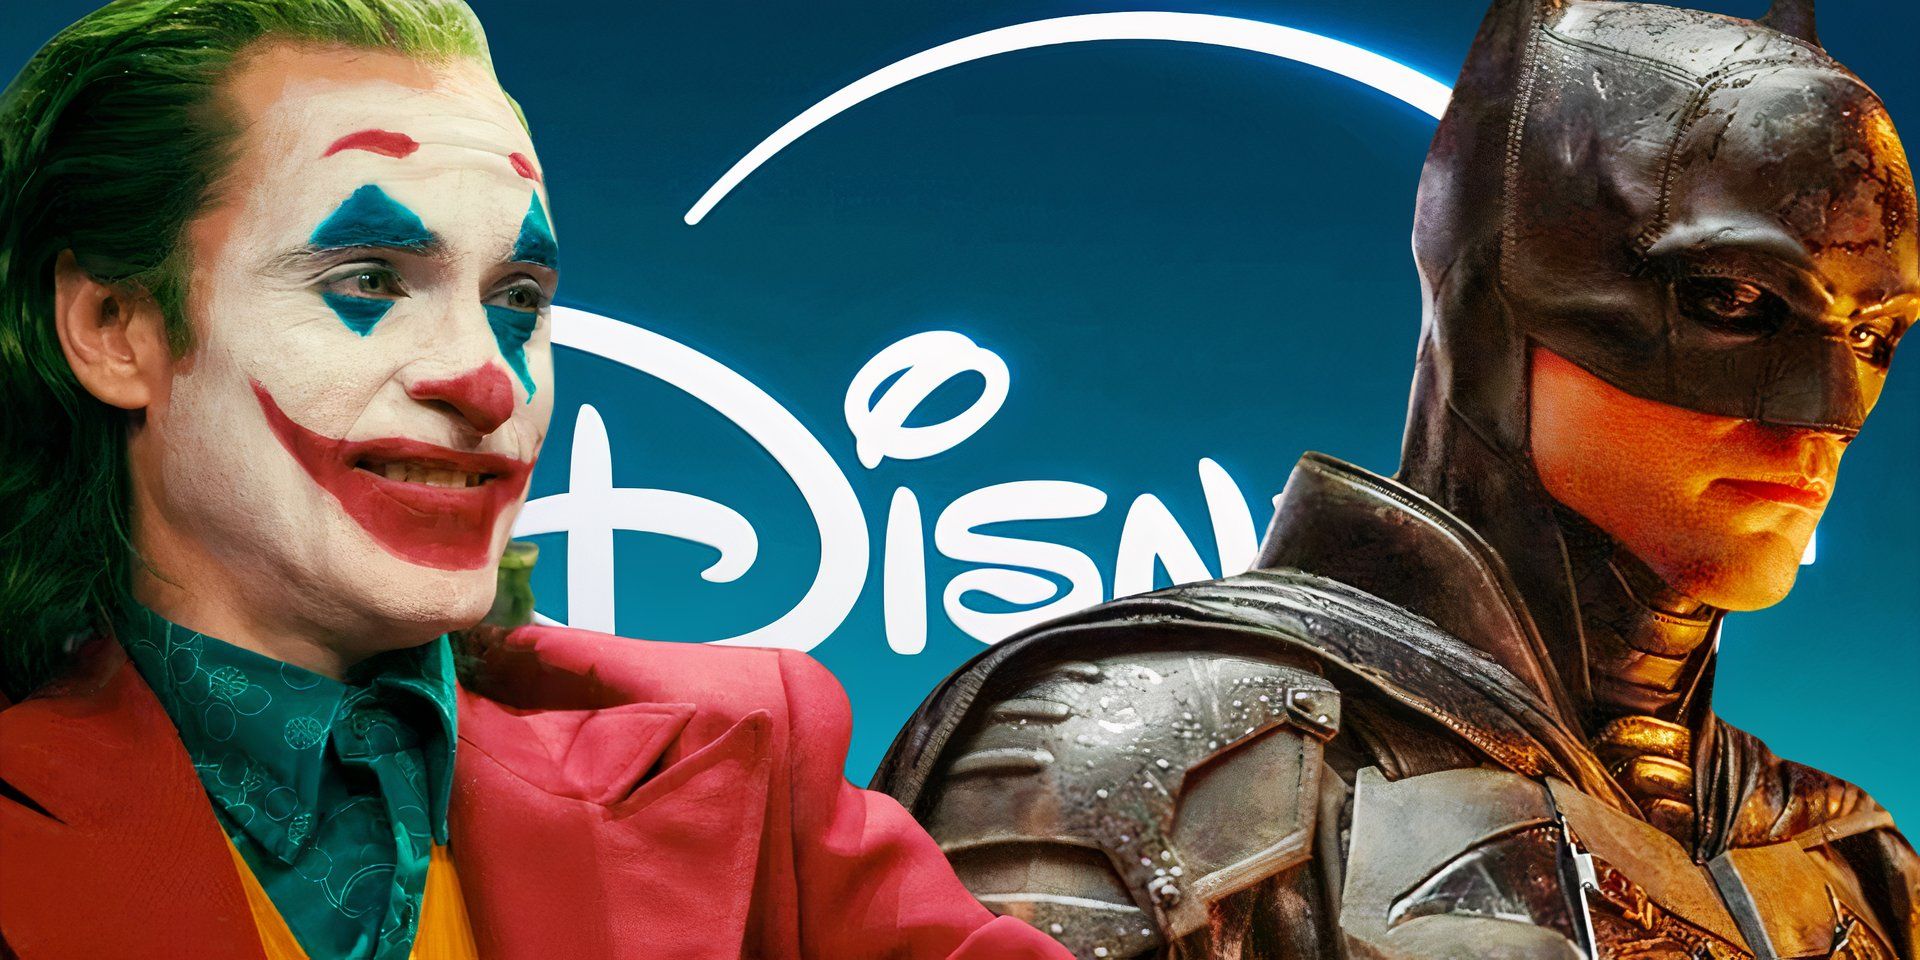 Joaquin Phoenix as Joker and Robert Pattinson as Batman in front of the Disney+ logo